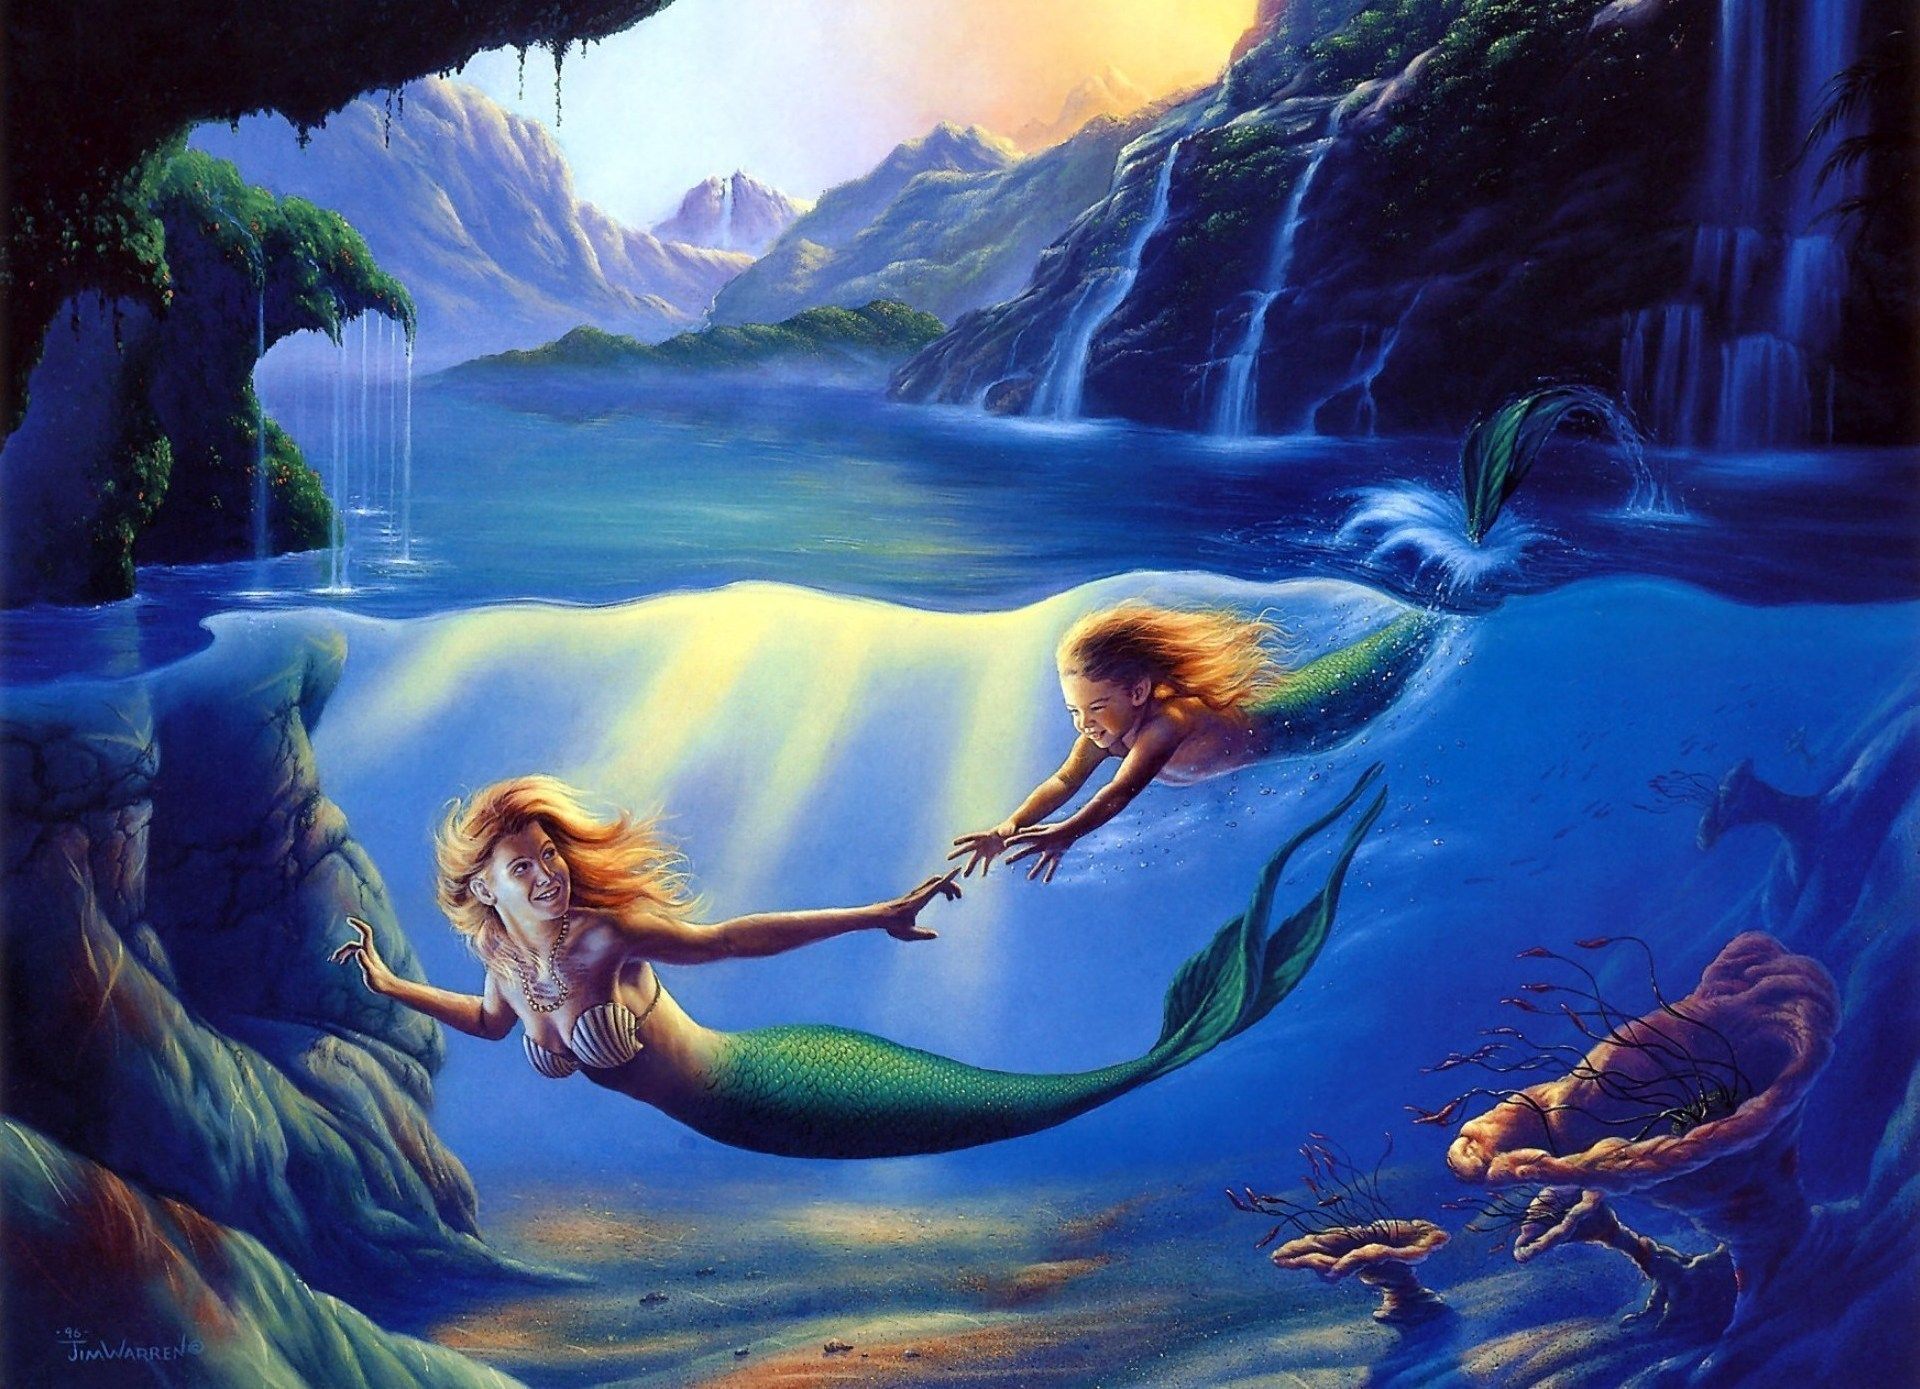 High Definition Wallpaper Of Mermaid Daughter Image Underwater